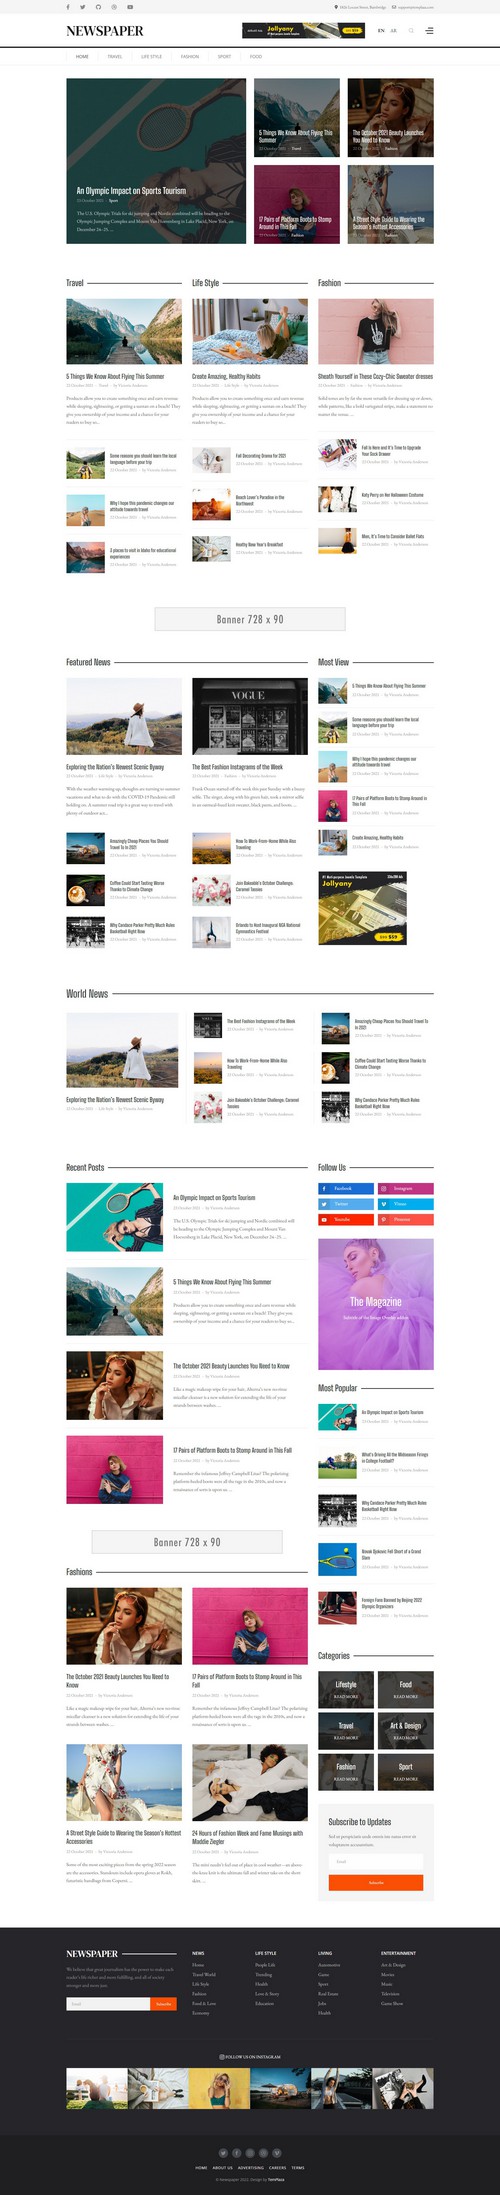 Newspaper - Magazine, News Portal Joomla 4 Template